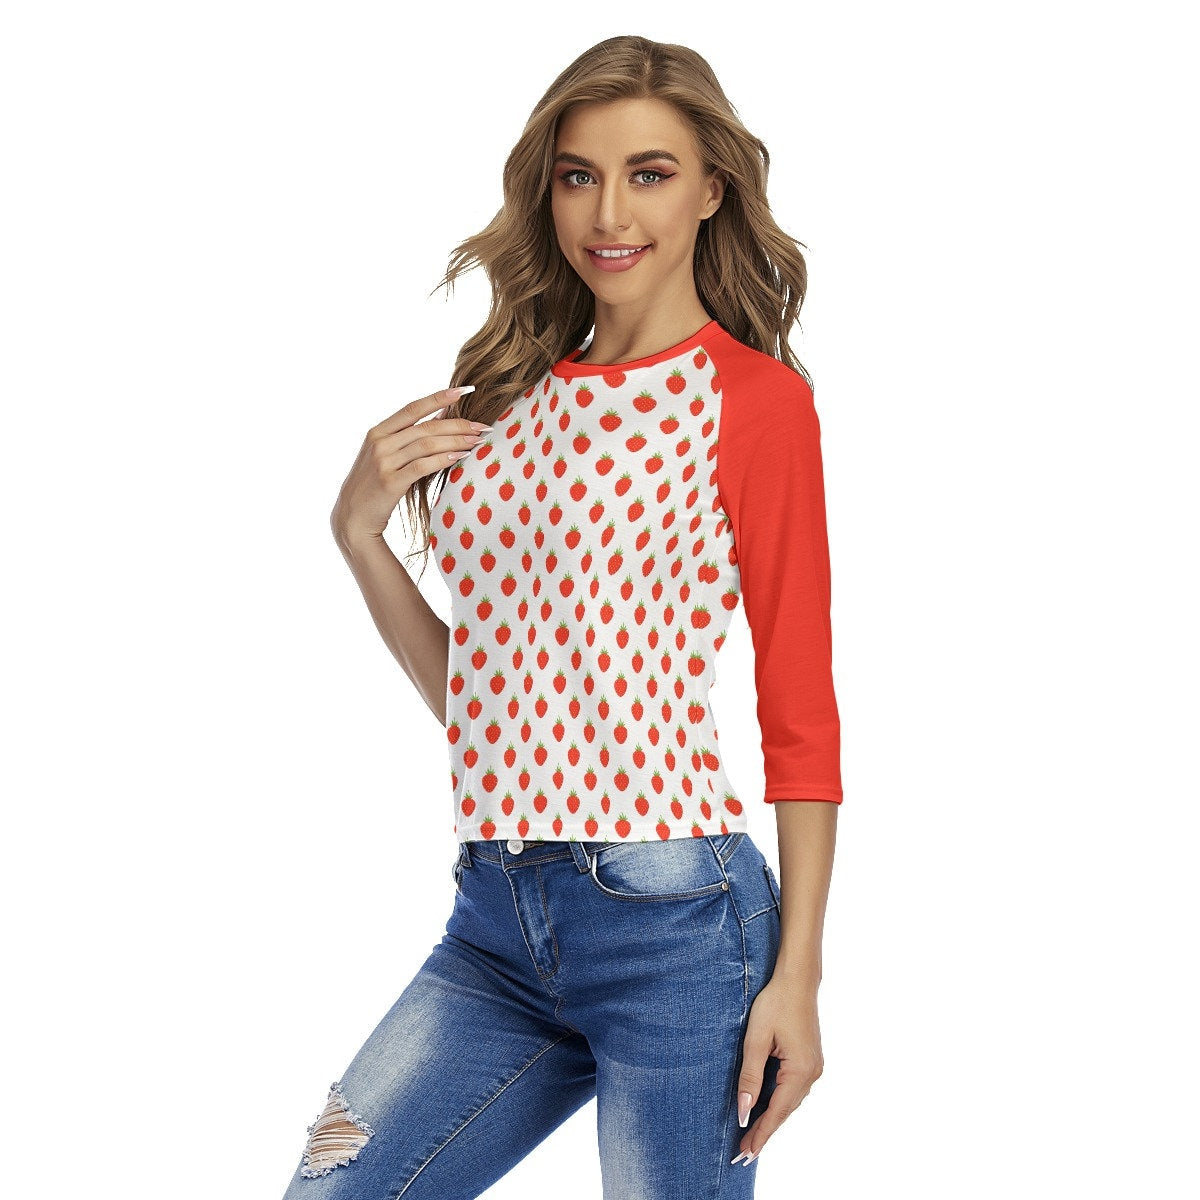 Strawberry Top, Retro Raglan Shirt, Raglan Tee, Strawberry Print Top, Red Raglan Shirt, 80s inspired Top, Raglan Shirt Women, Baseball Shirt